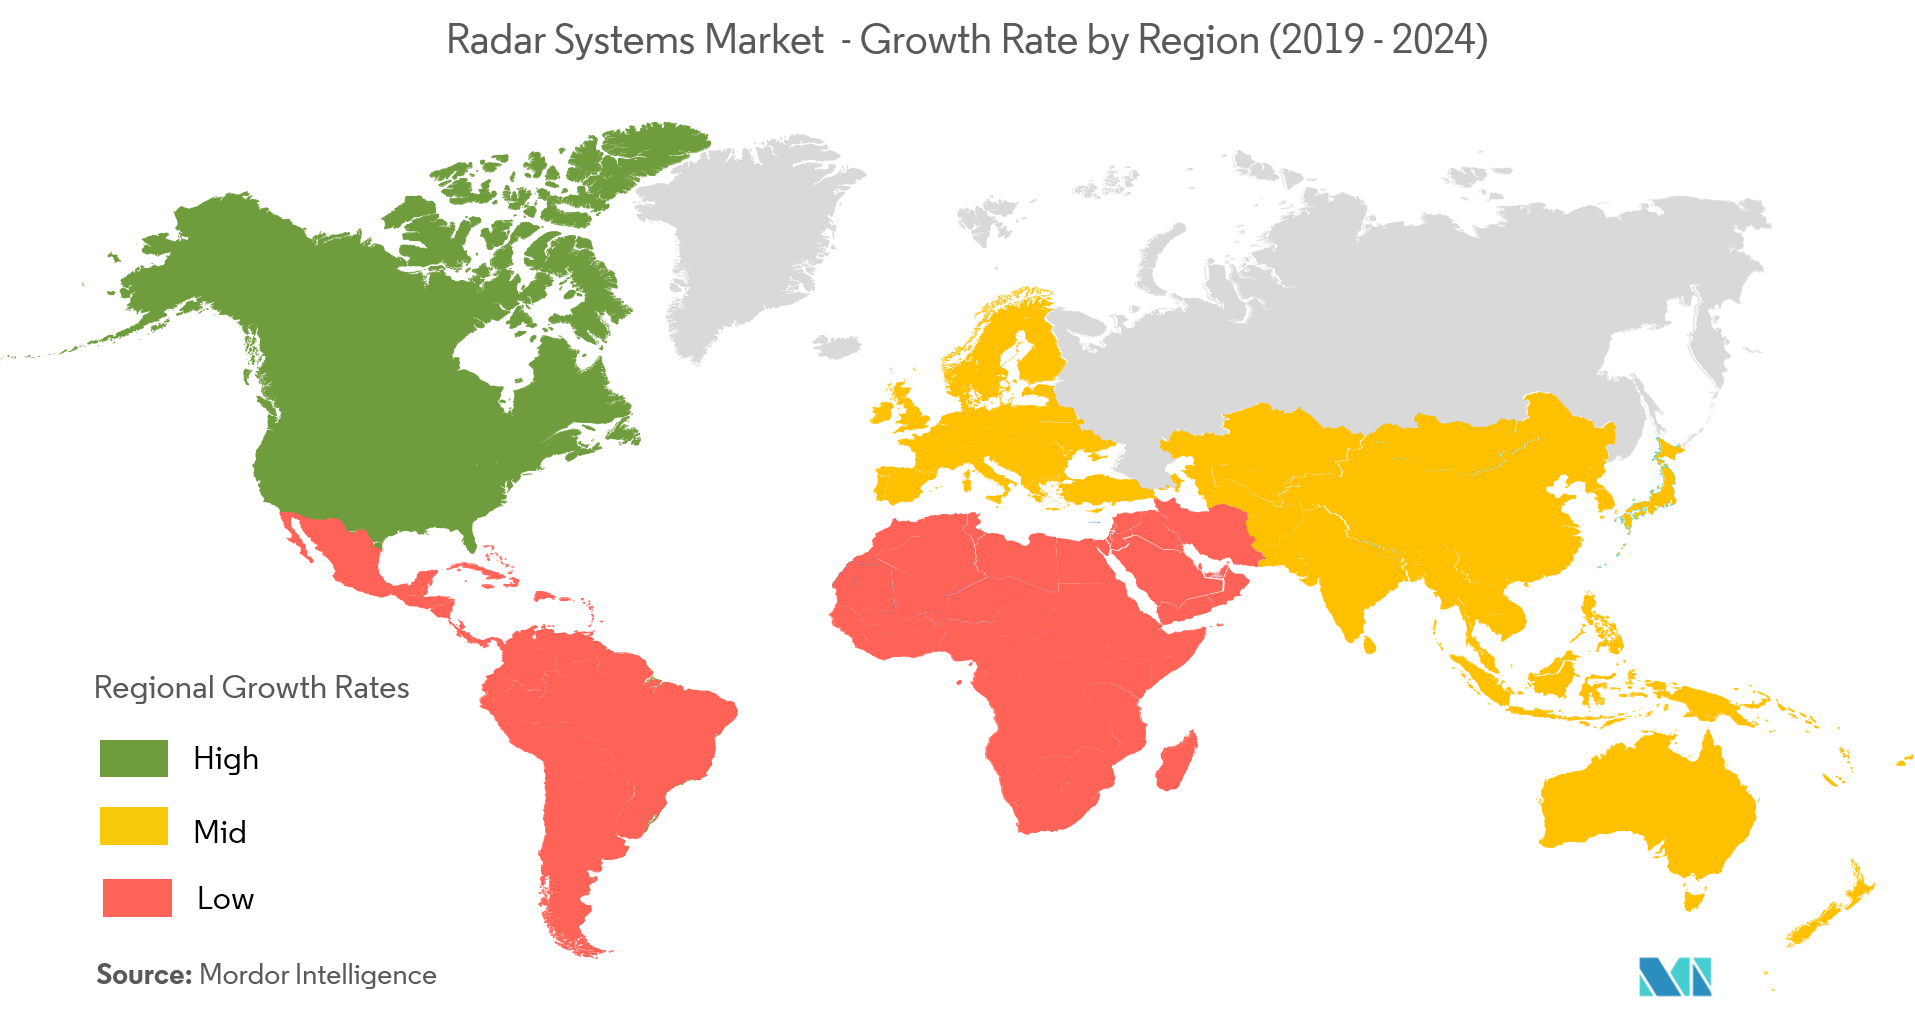 Radar Systems Market - Growth Rate by Region (2019-2024)